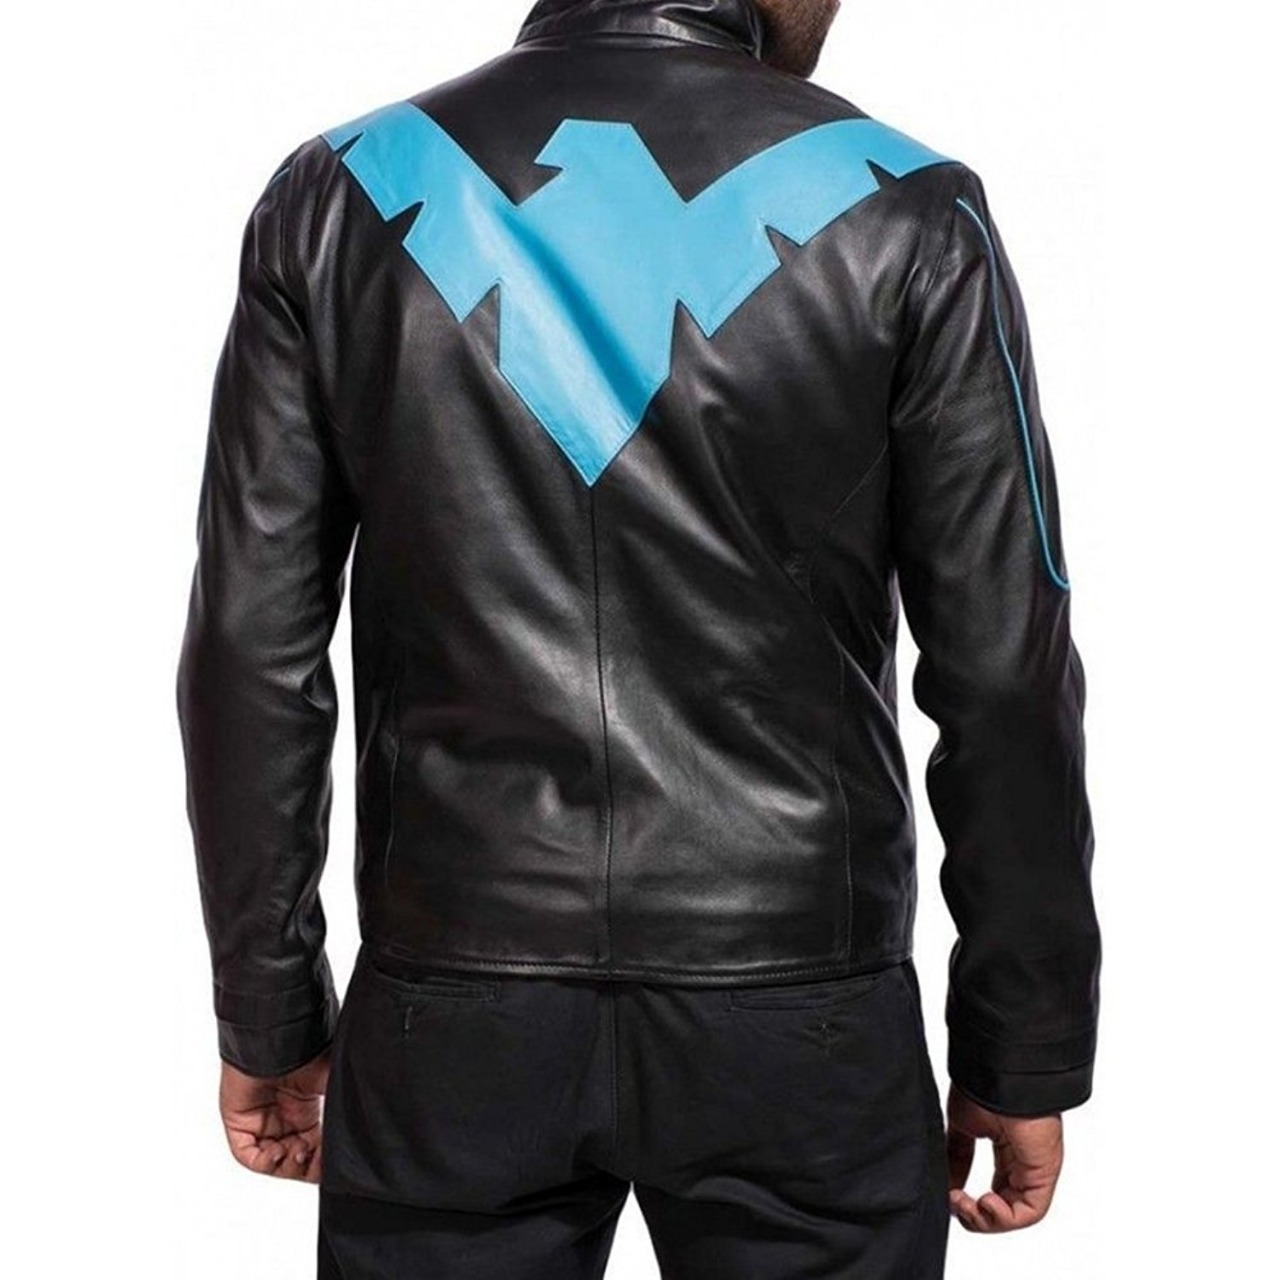 Nightwing Leather Jacket.